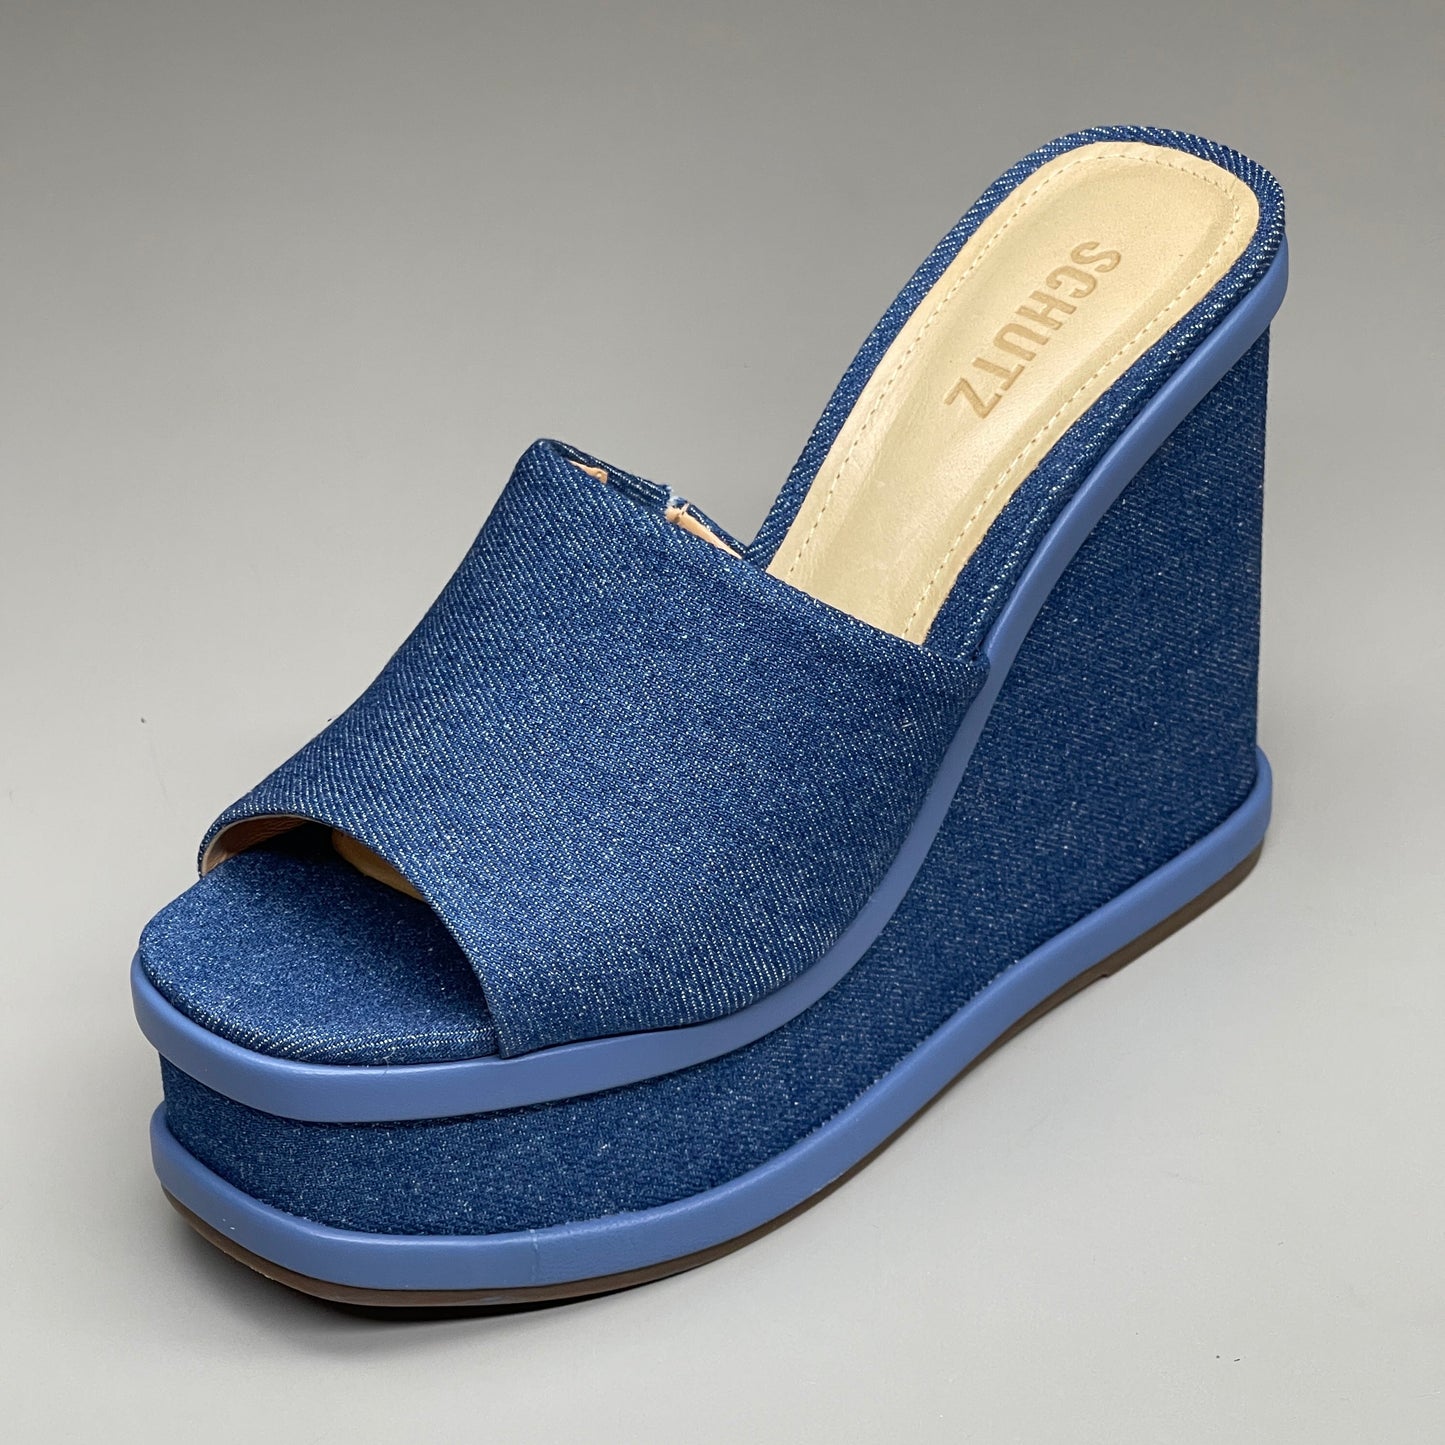 SCHUTZ Dalle Denim Women's Wedge Sandal Blue Platform Shoe Sz 8.5B (New)